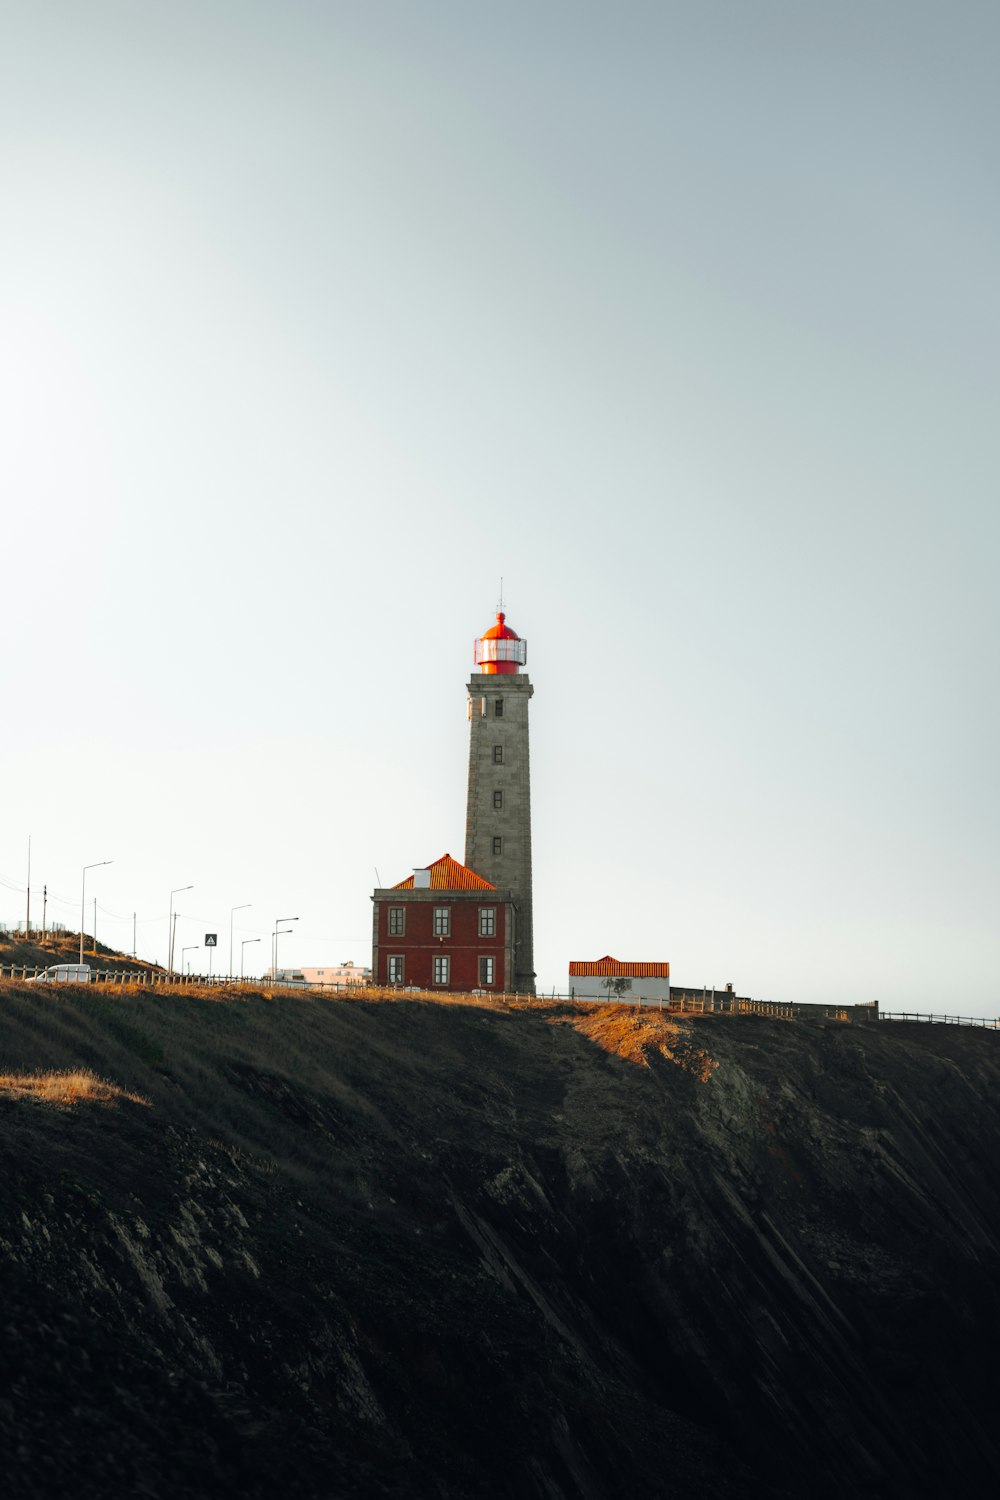 a lighthouse on a hill